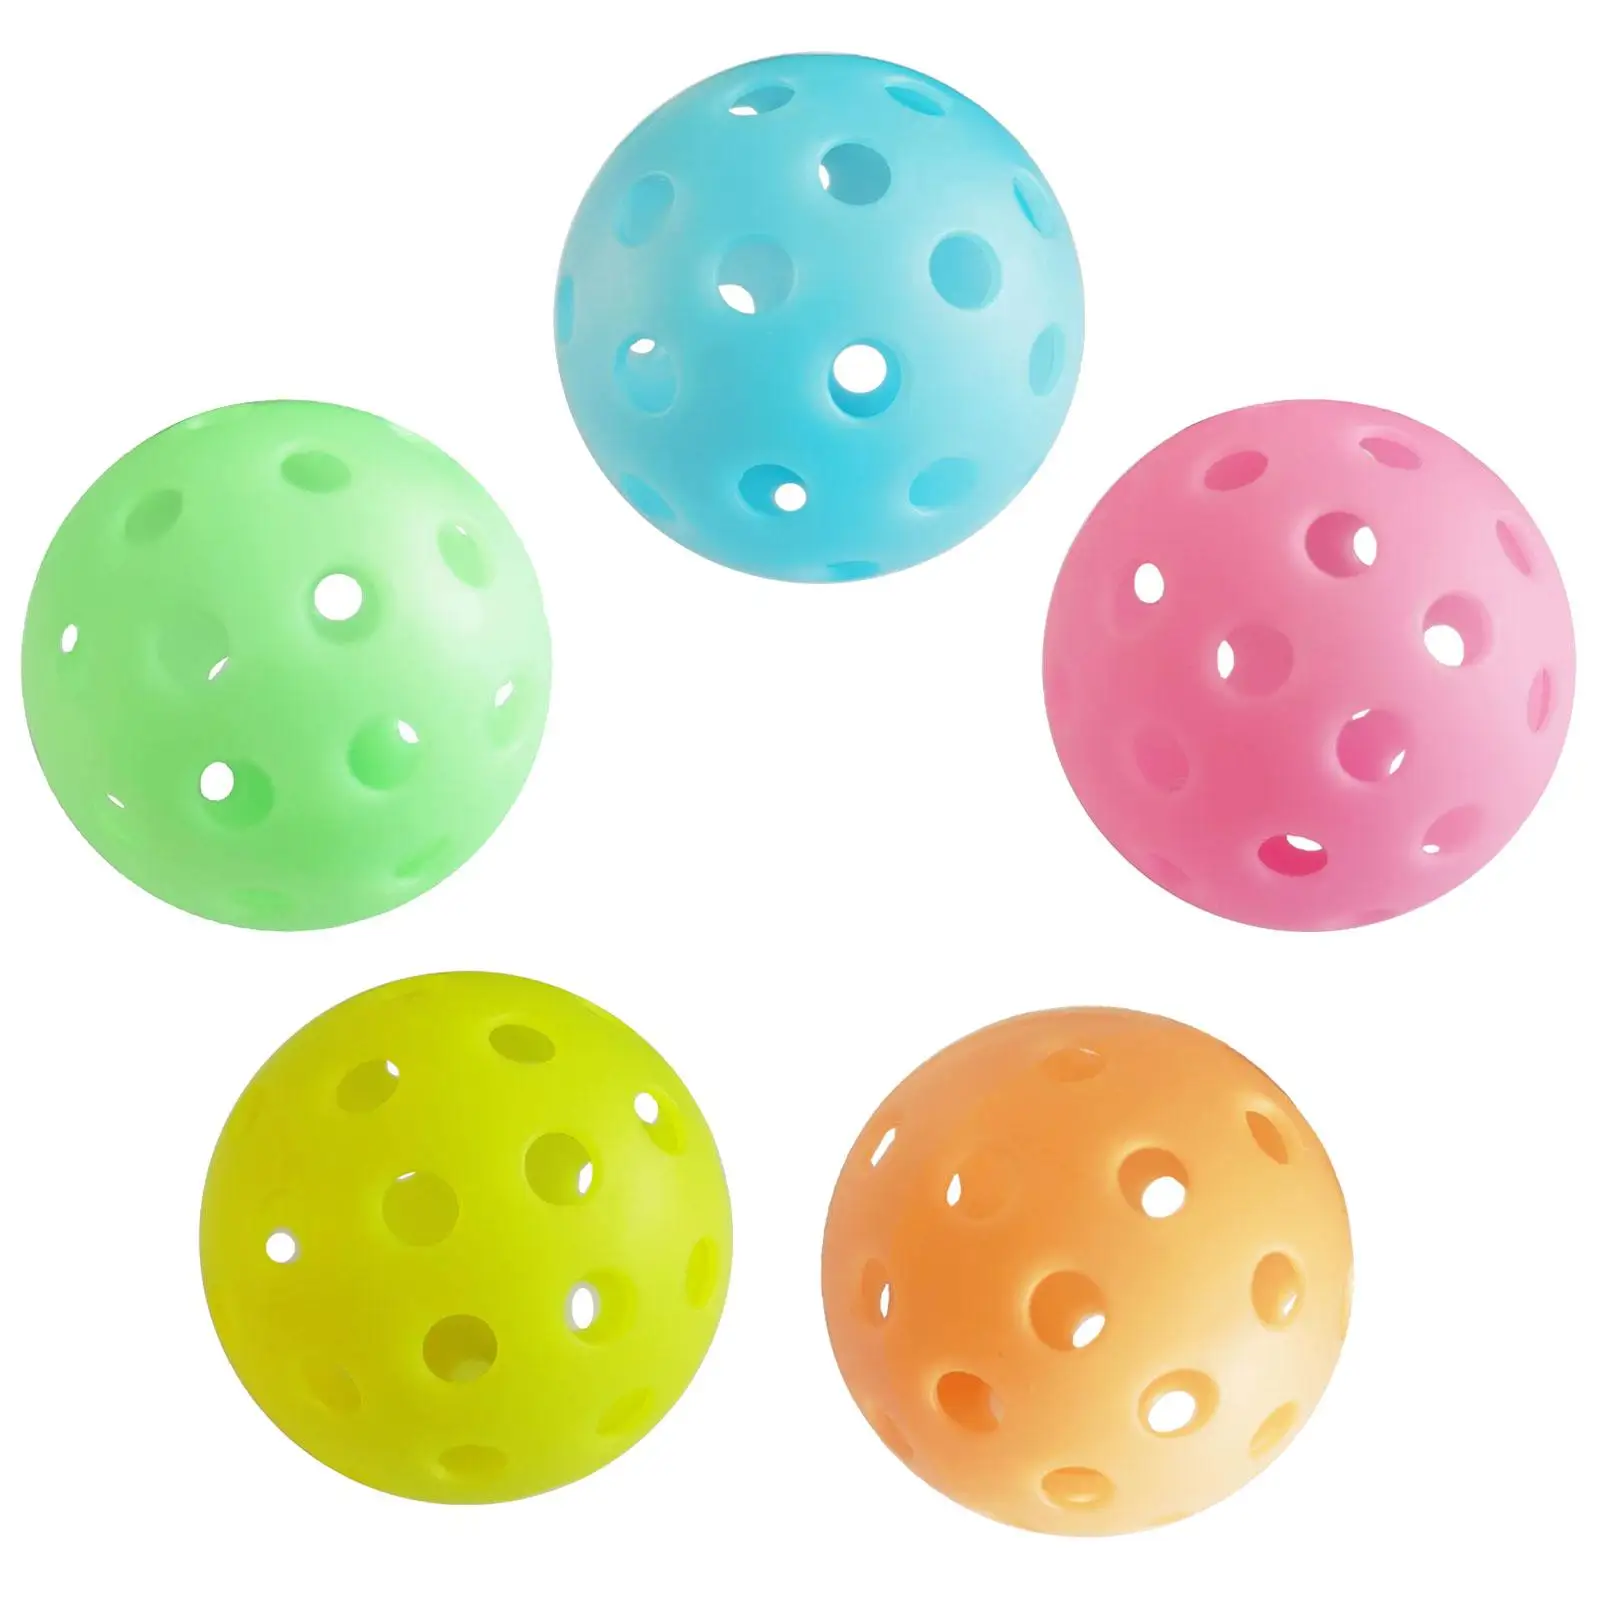 definir bolas de pickleball brilhantes coloridas. equipamentos